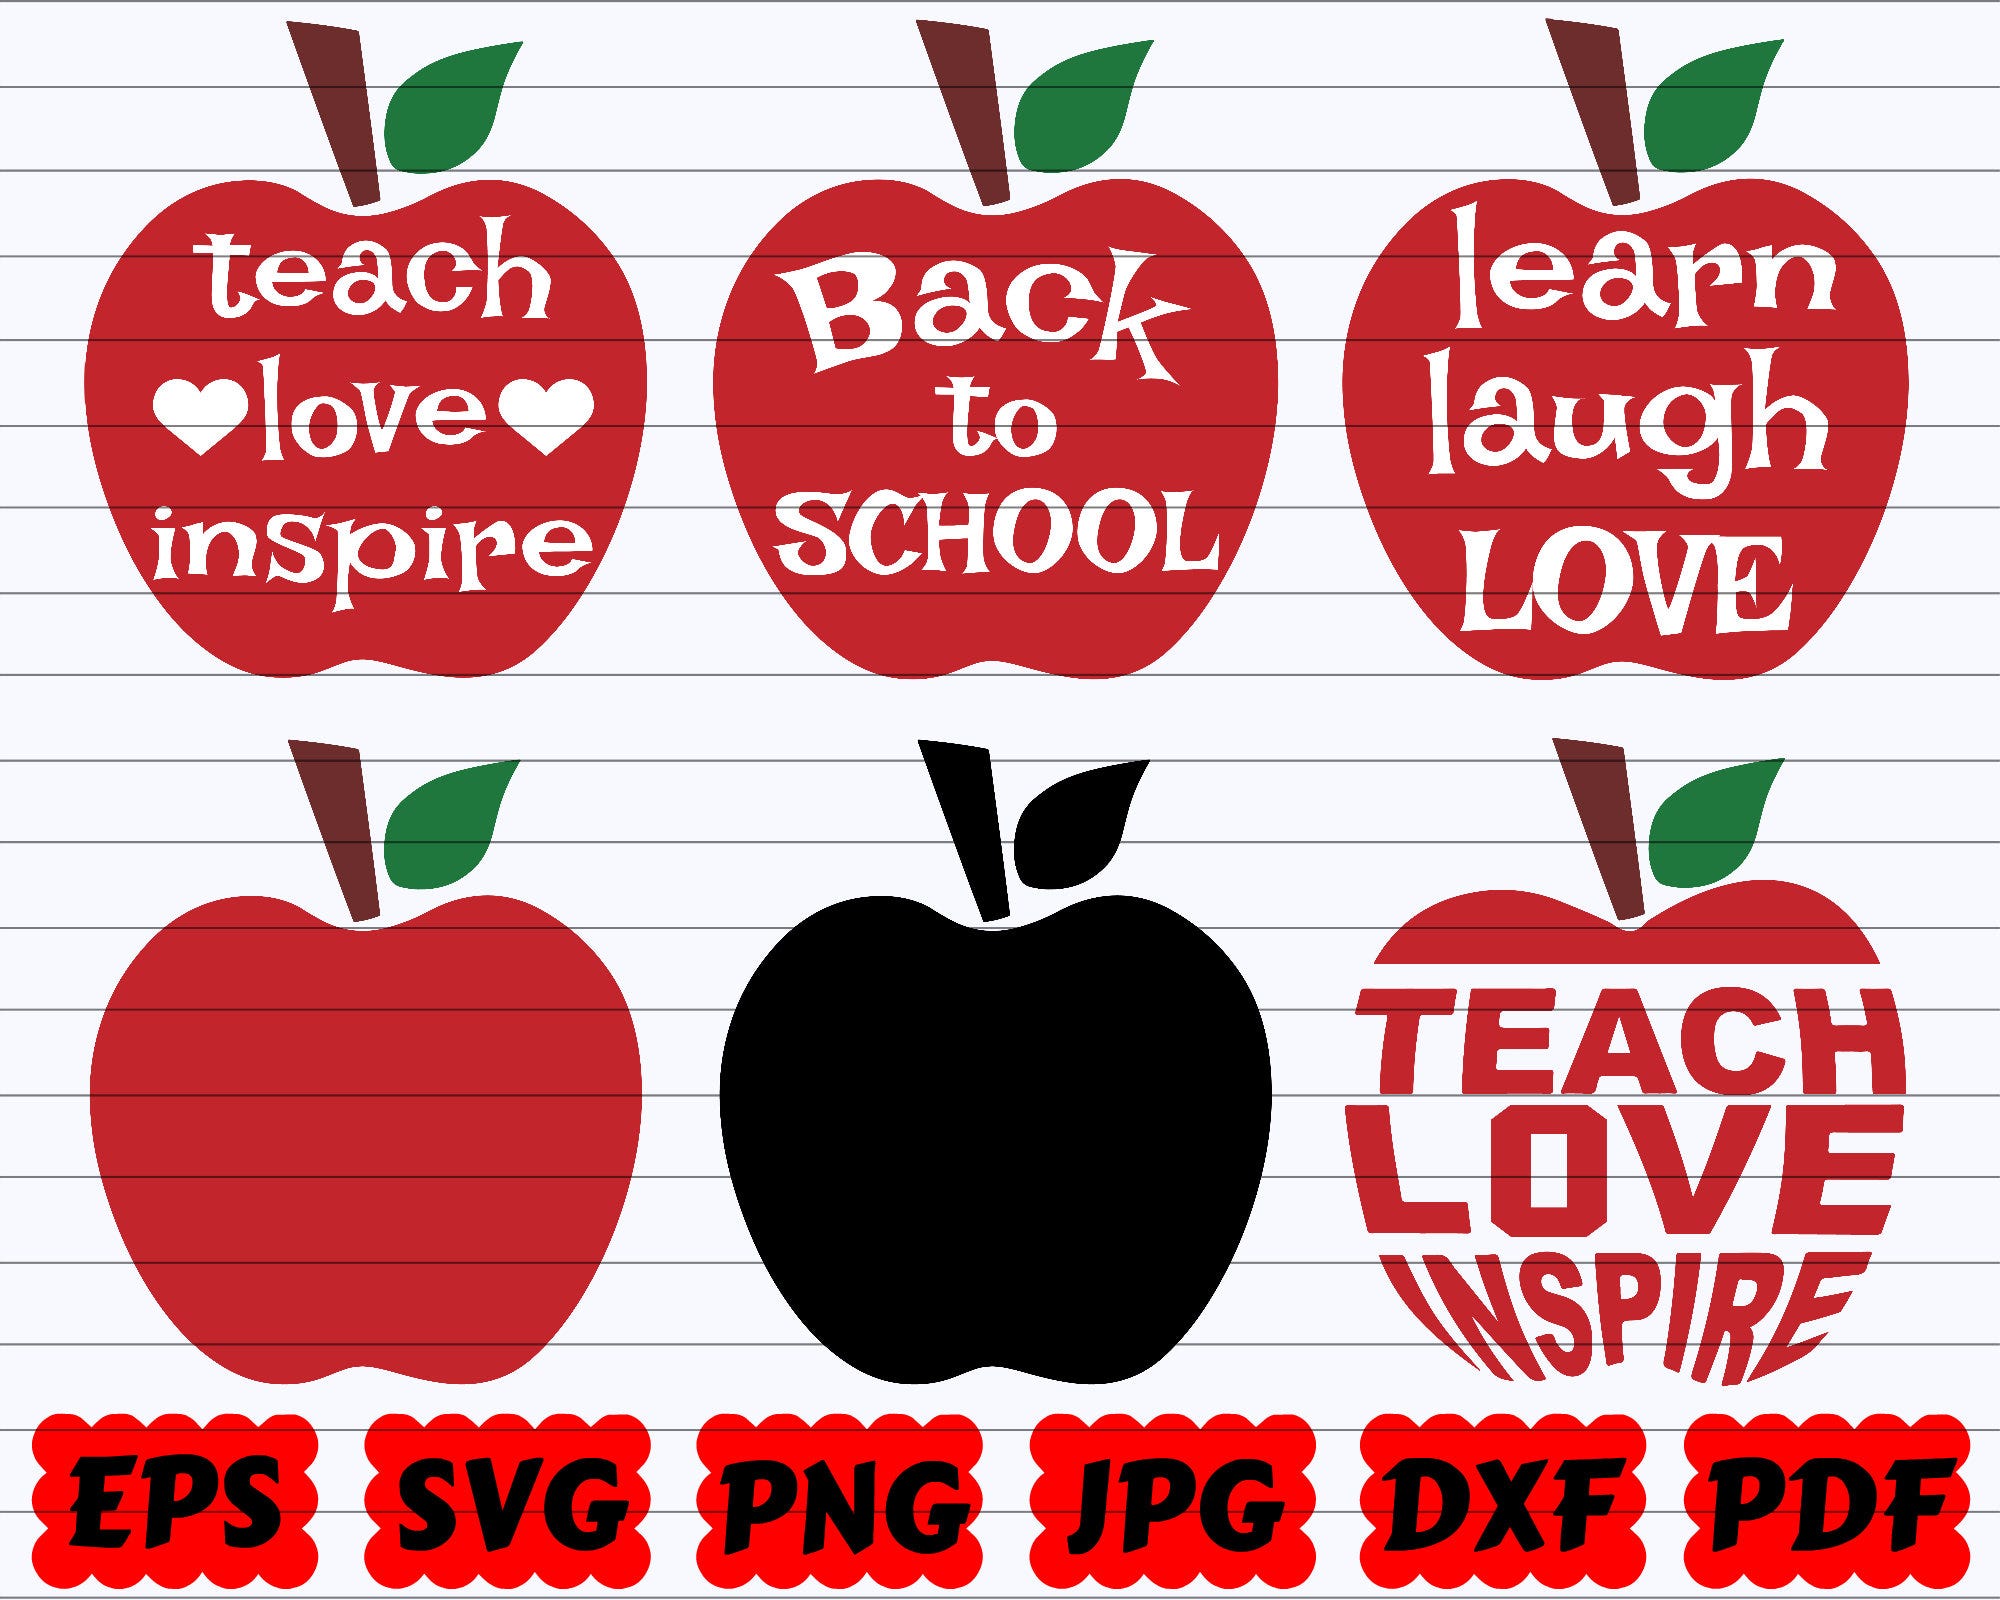 School Apple SVG| School SVG Bundle| Teach Love Inspire SVG| Back to School Svg| Learn Laugh Love Svg| Apple Svg| Teacher Svg|Apple Cut File